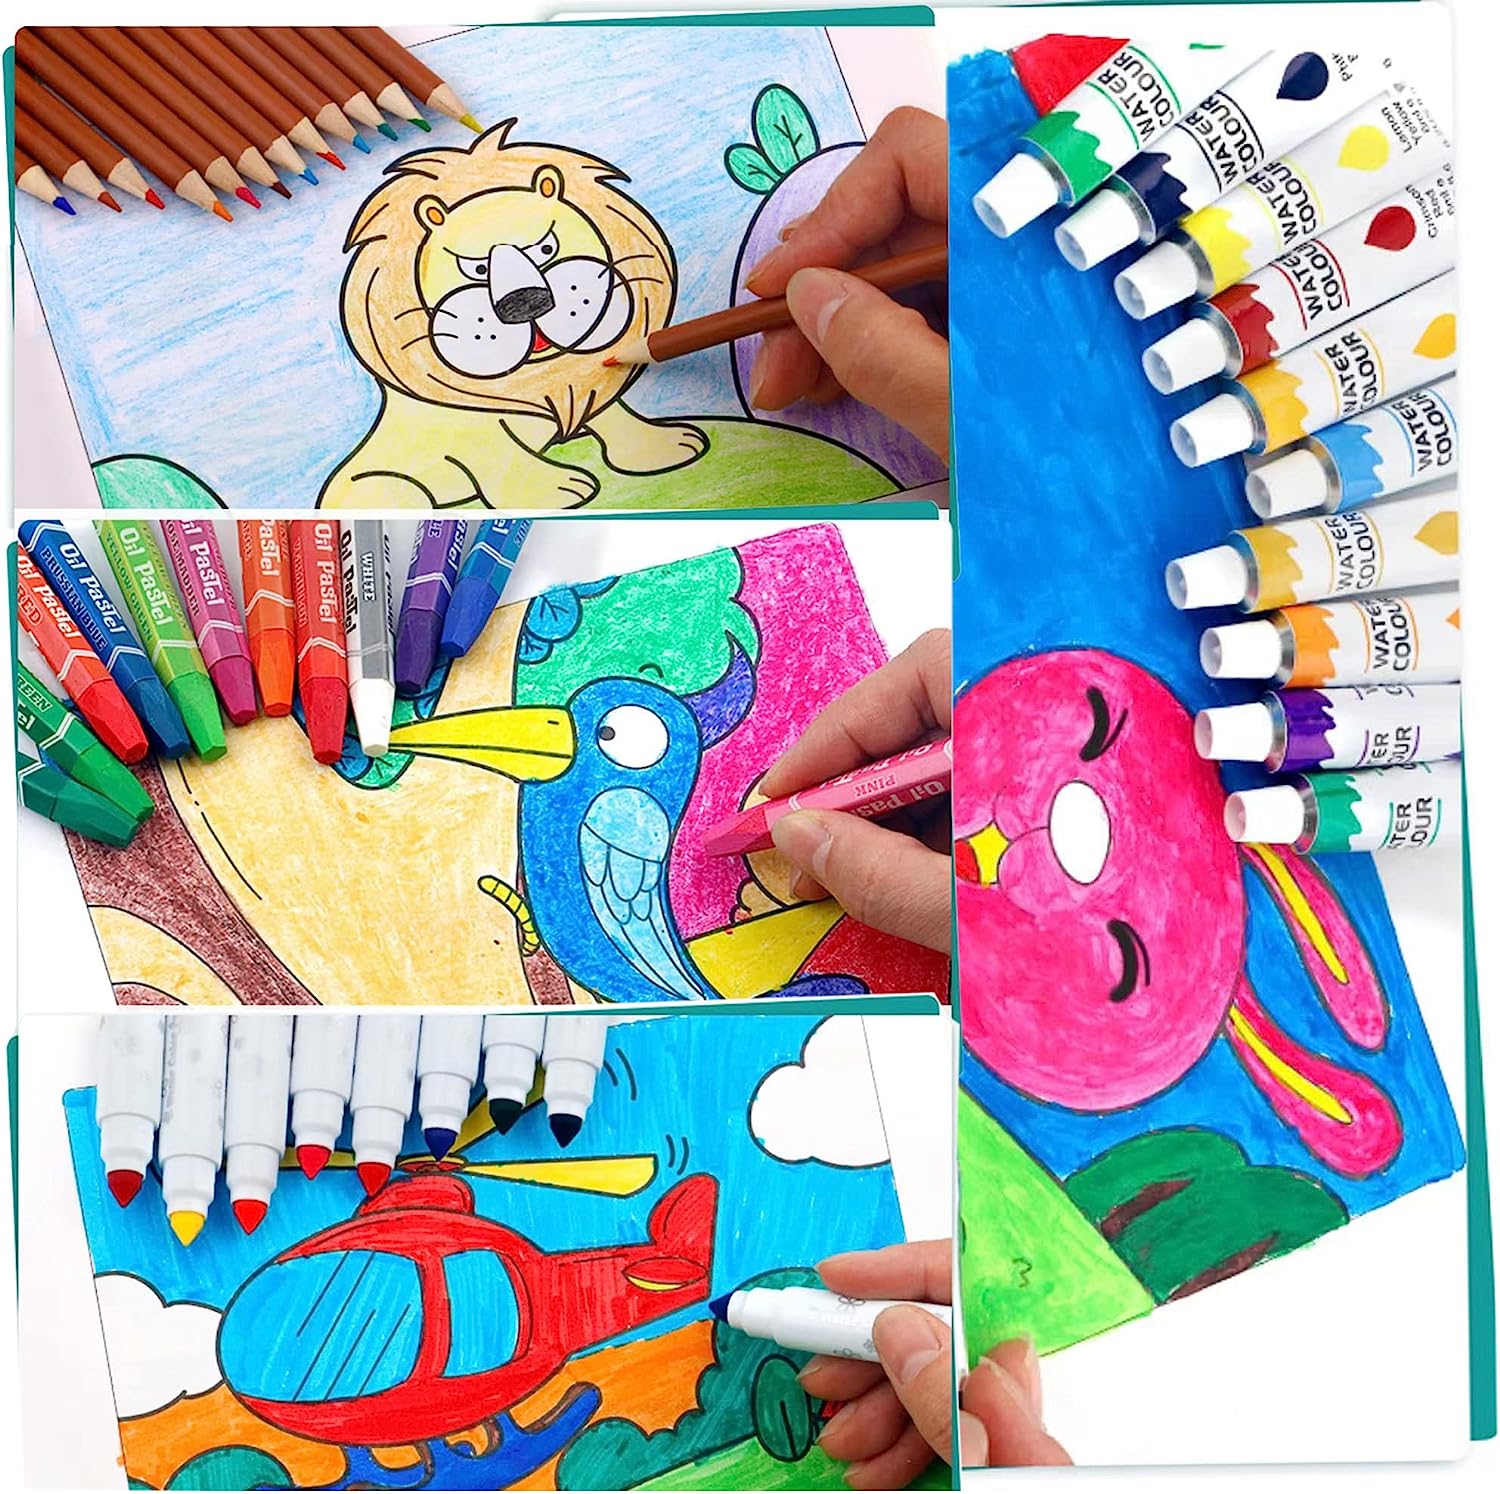 Art Supplies, Drawing Painting Art Kit, Gifts for Kids Girls Boys Teens, Art  Set